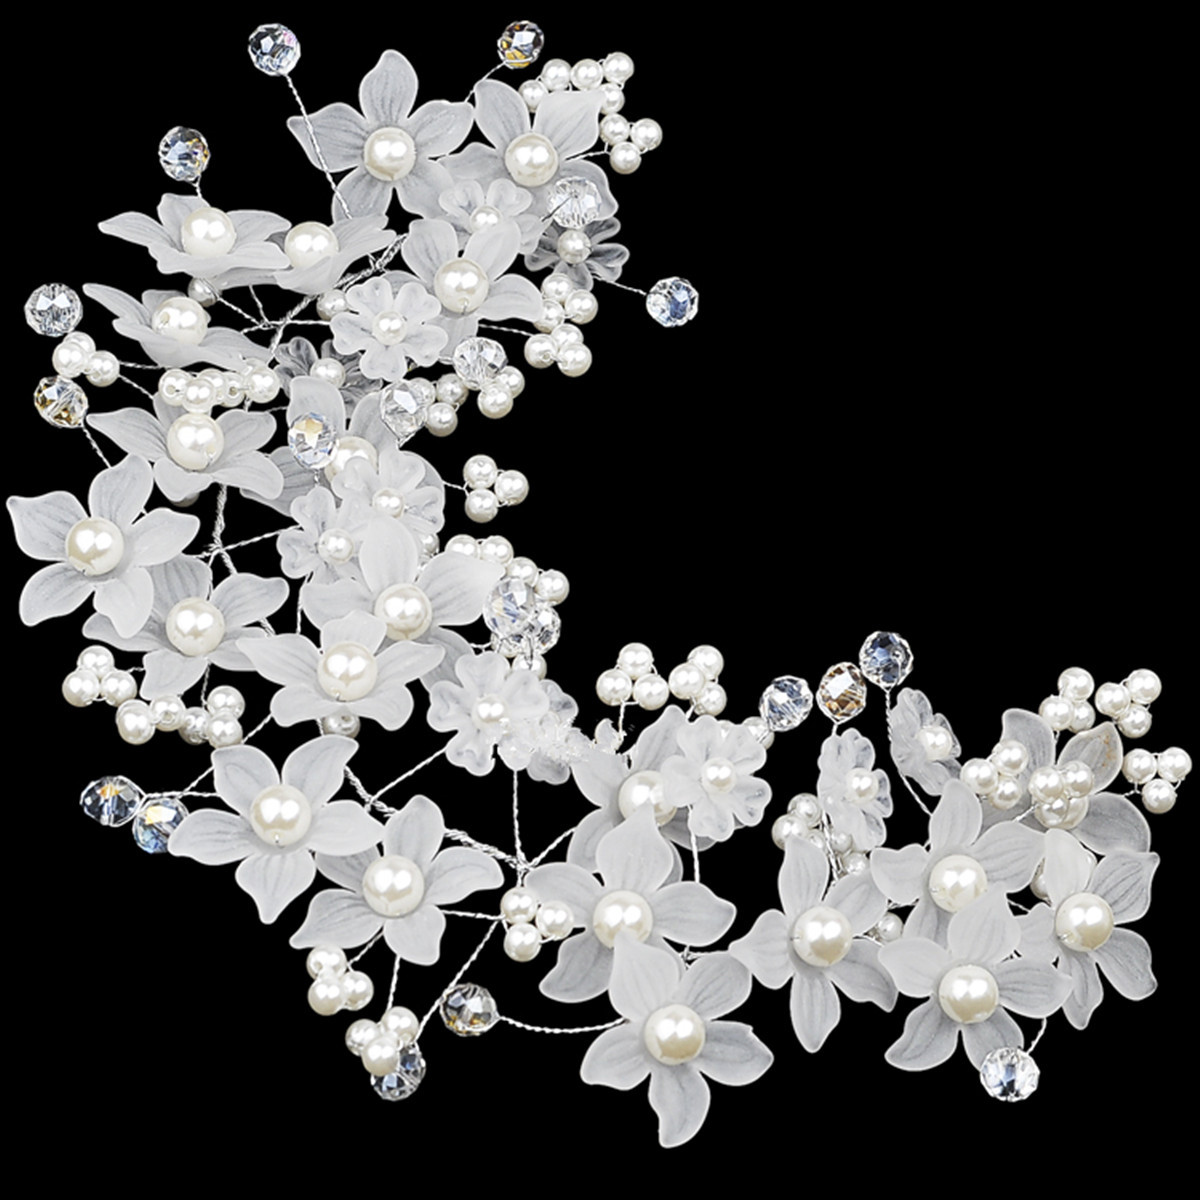 Bride-Flower-Artificial-Pearl-Headpiece-Bridal-Wedding-Headbrand-Hair-Accessories-1050976